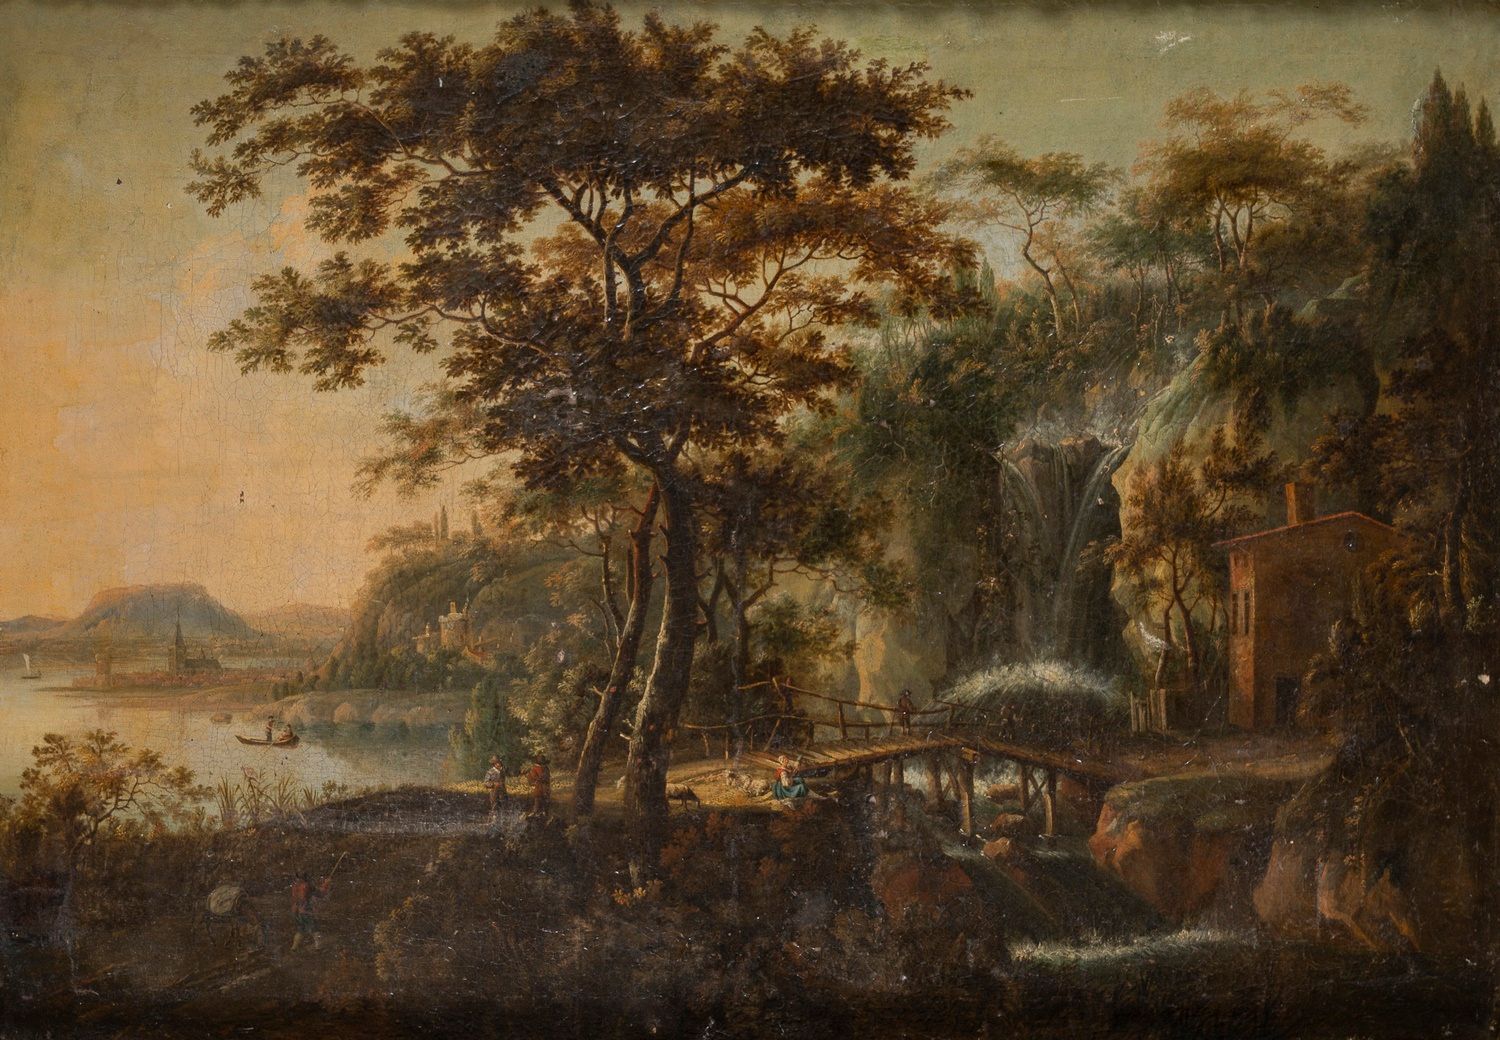 Null Jacob van der CROOS (? 1630 - Leeuwarden 1700)

景观与桥梁

帆布

78 x 111厘米

左下角有&hellip;